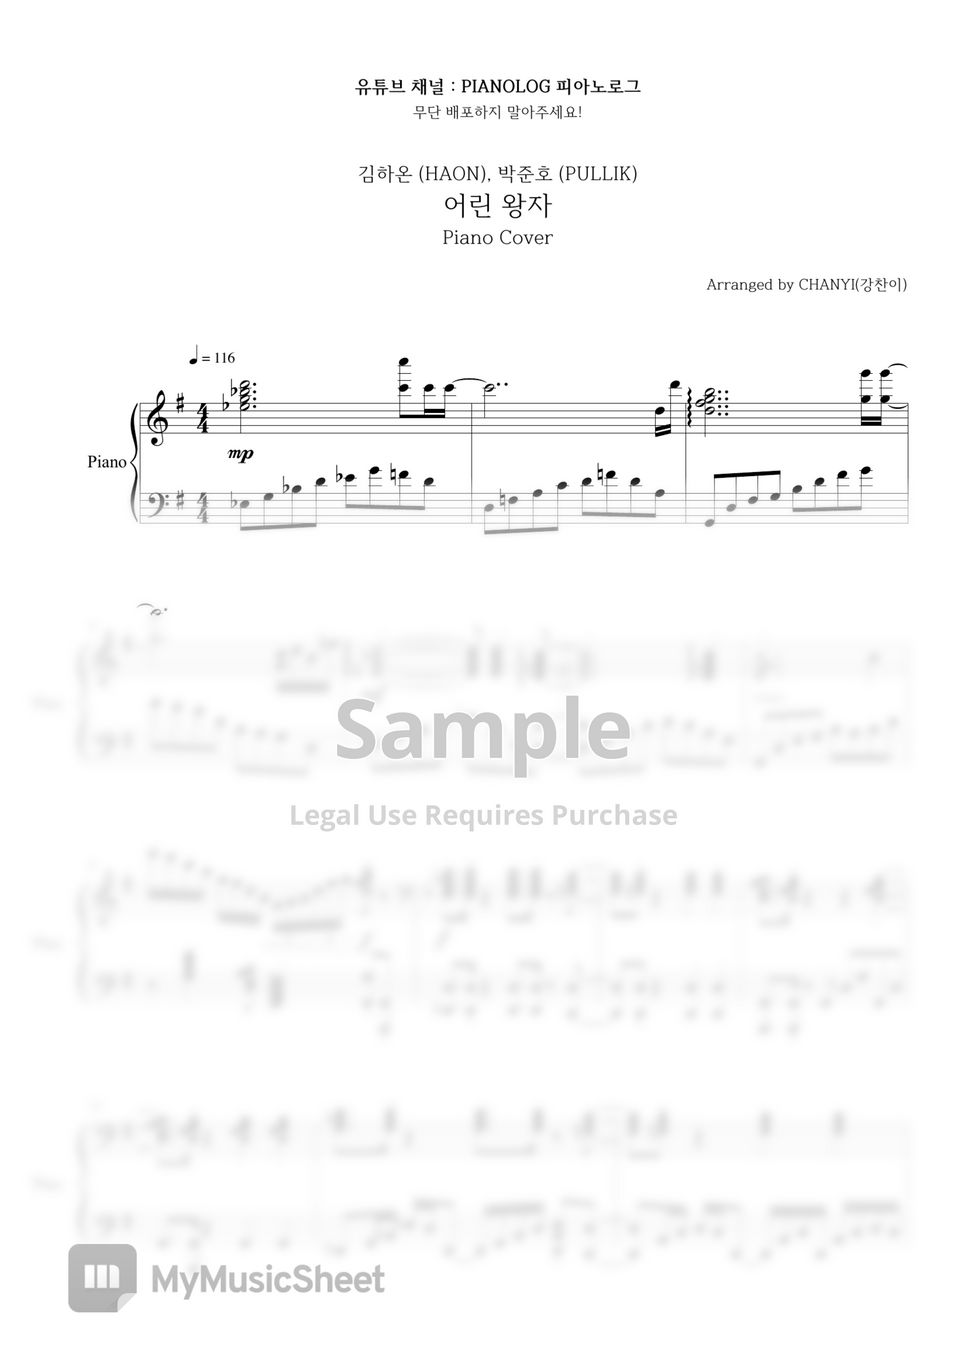 HAON, PULLIK - 어린왕자 by Pianolog